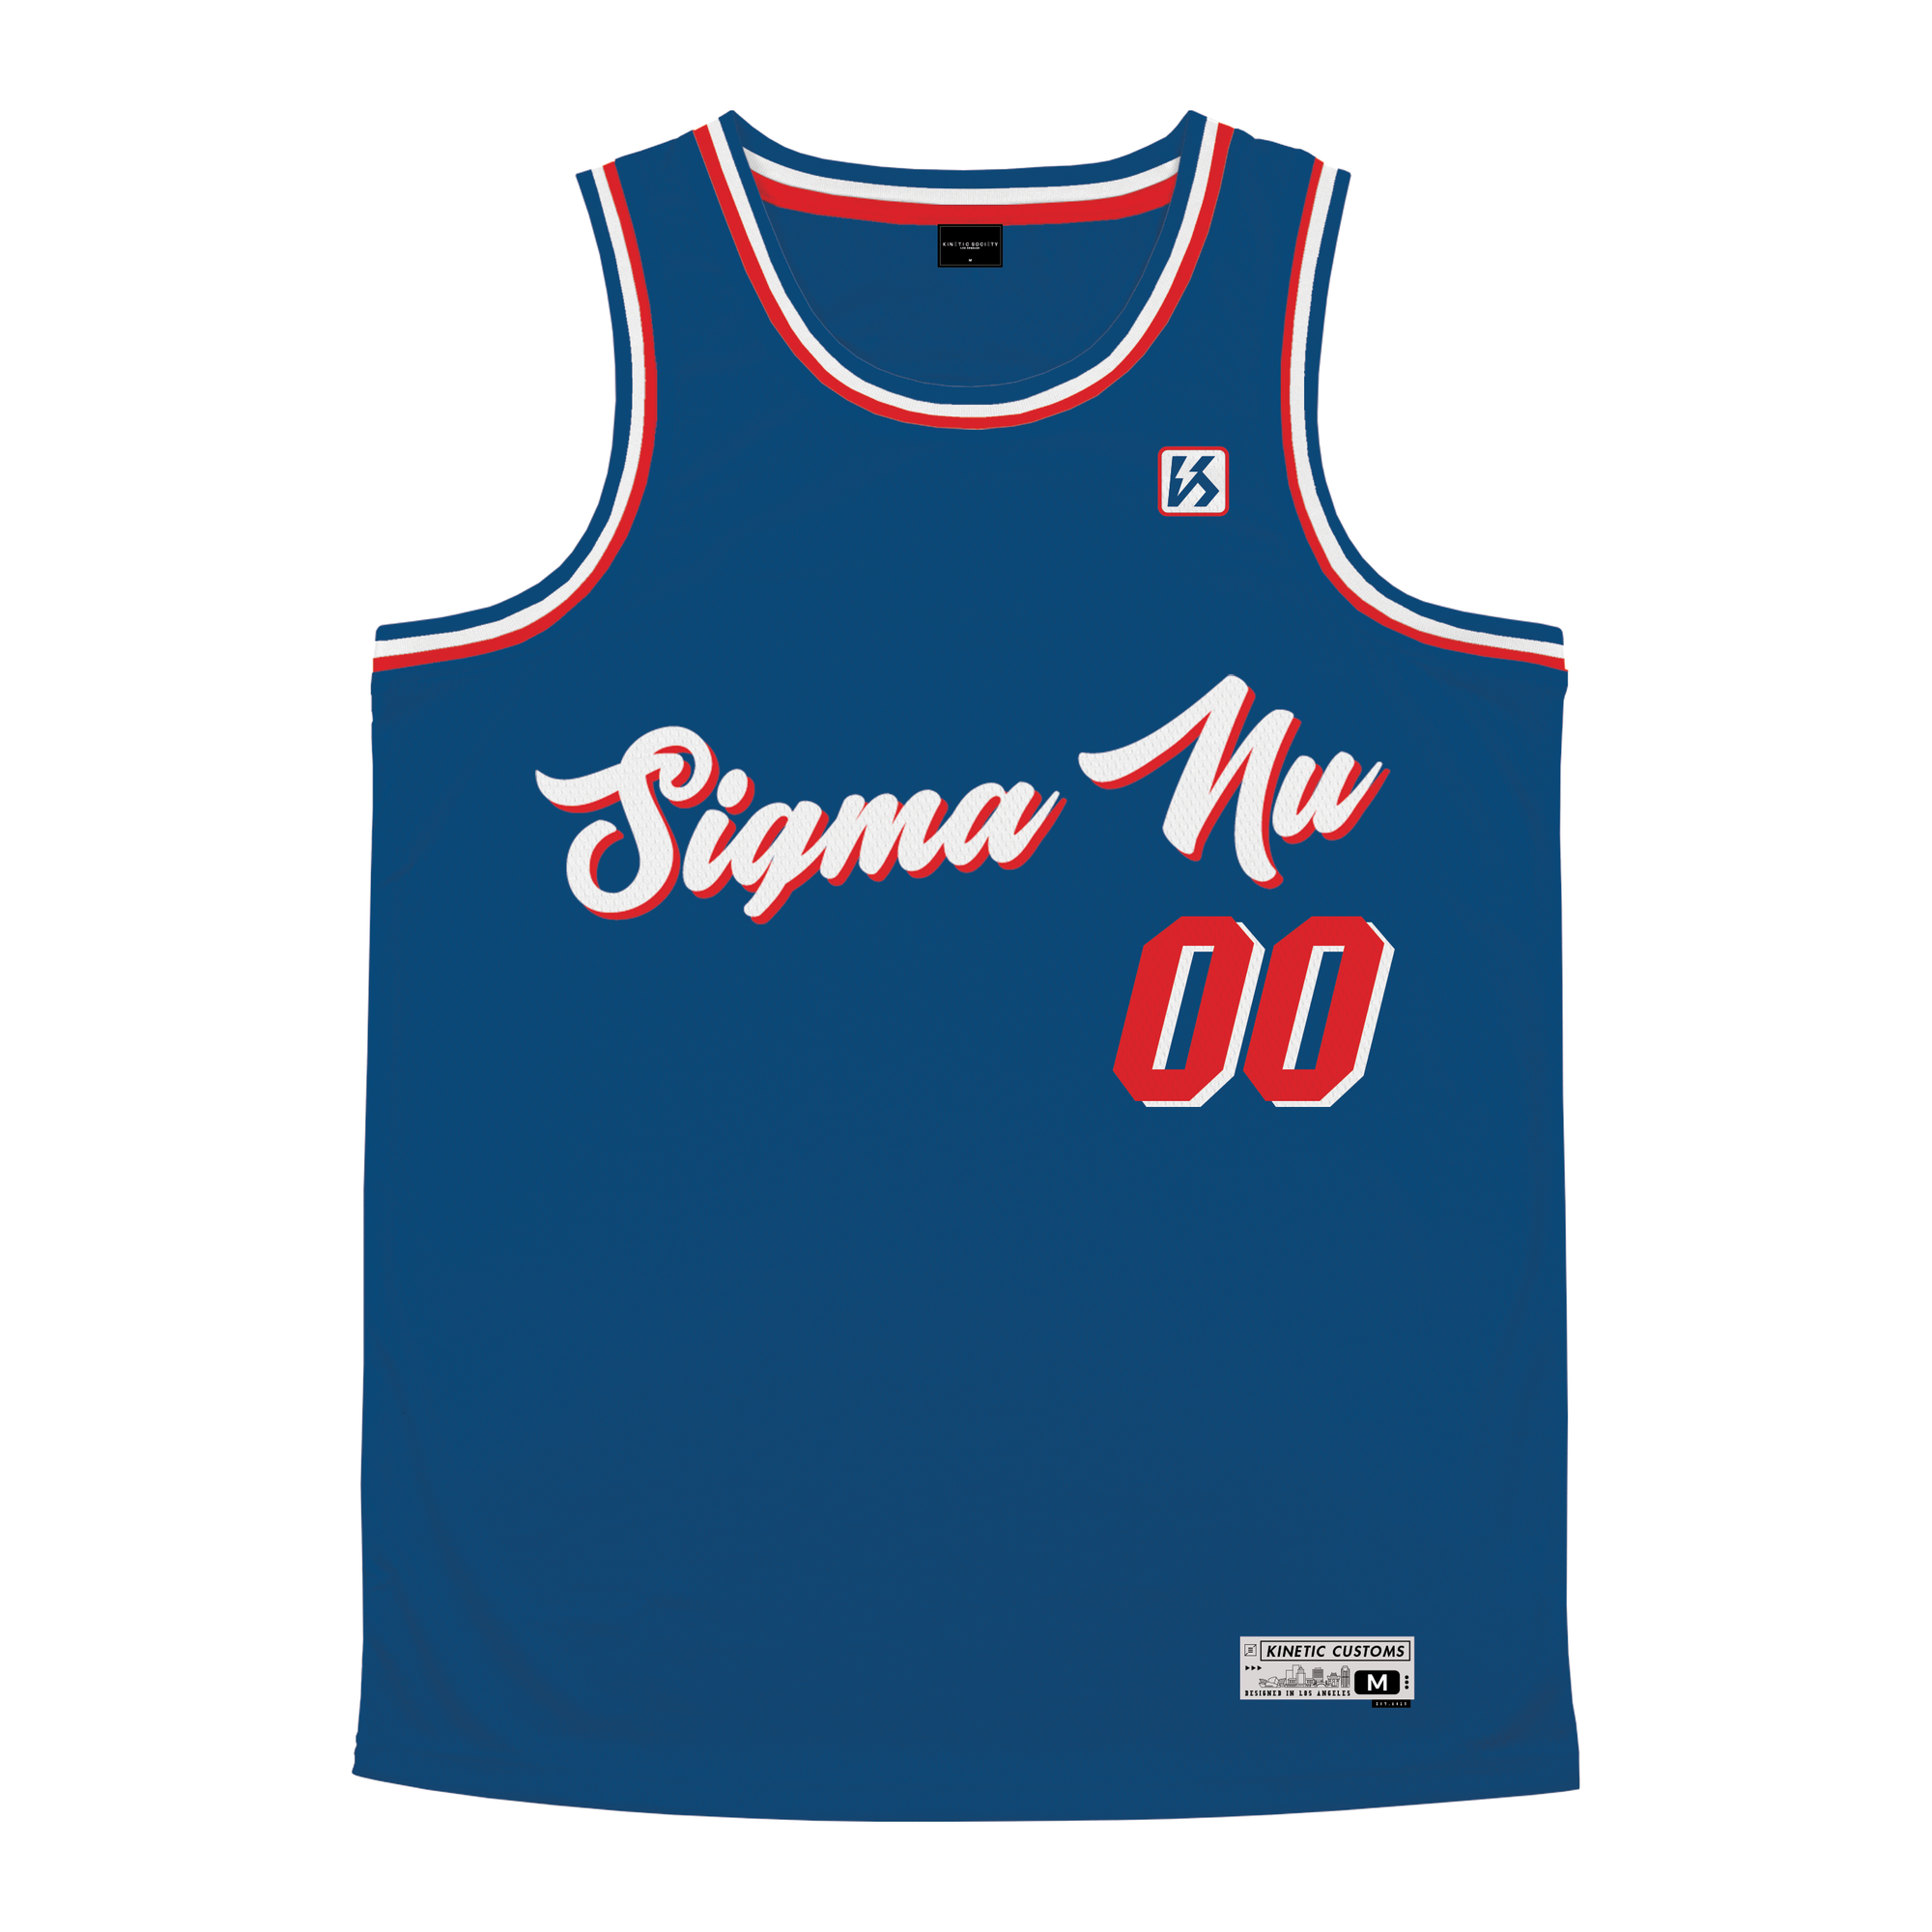 Sigma Nu - The Dream Basketball Jersey